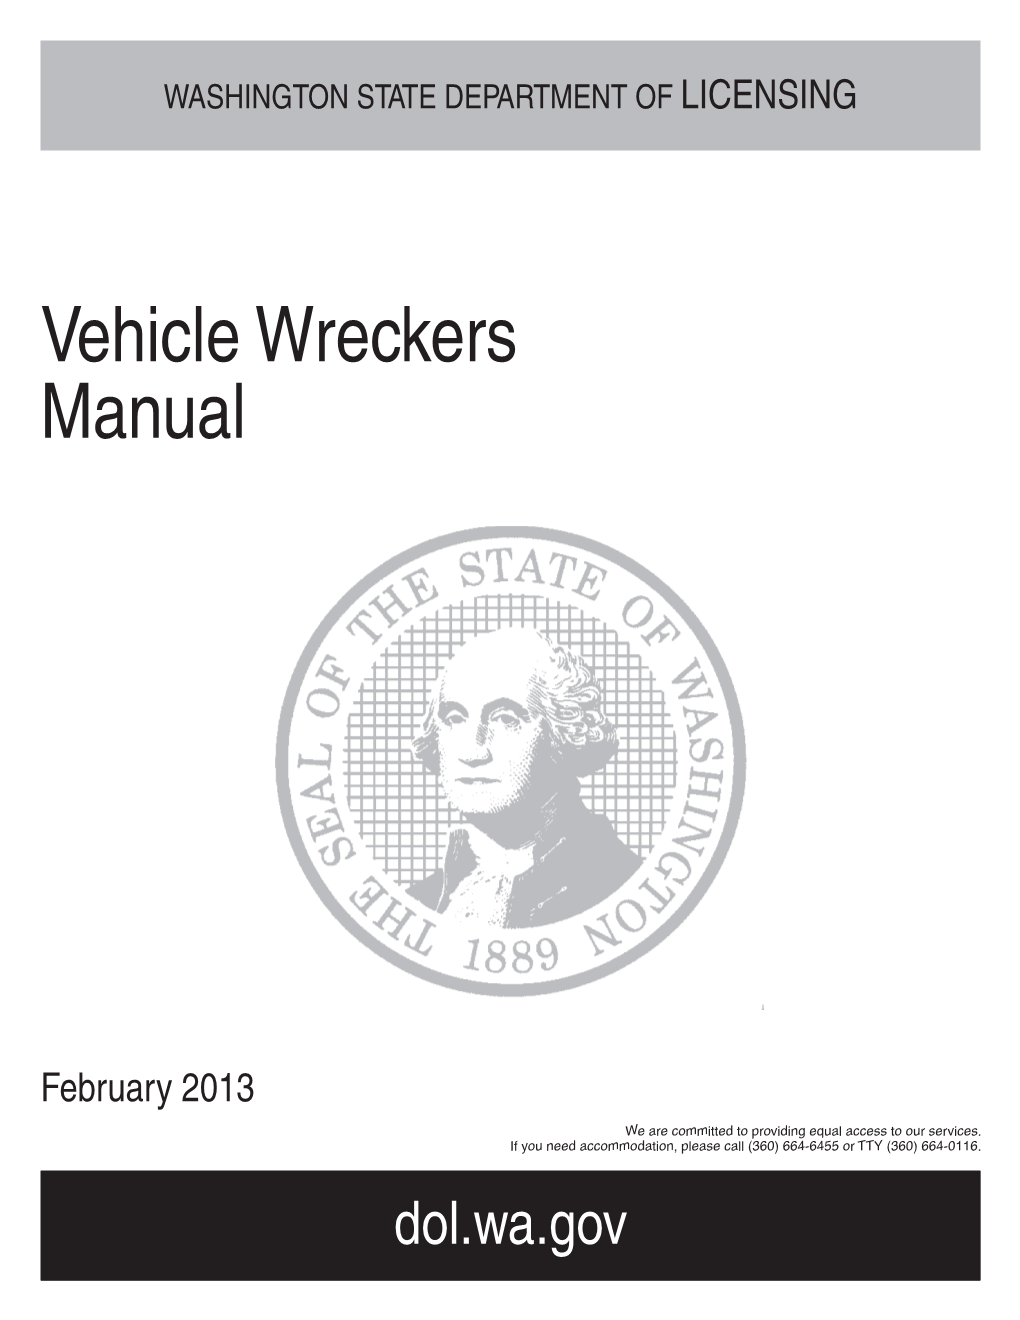 Vehicle Wreckers Manual